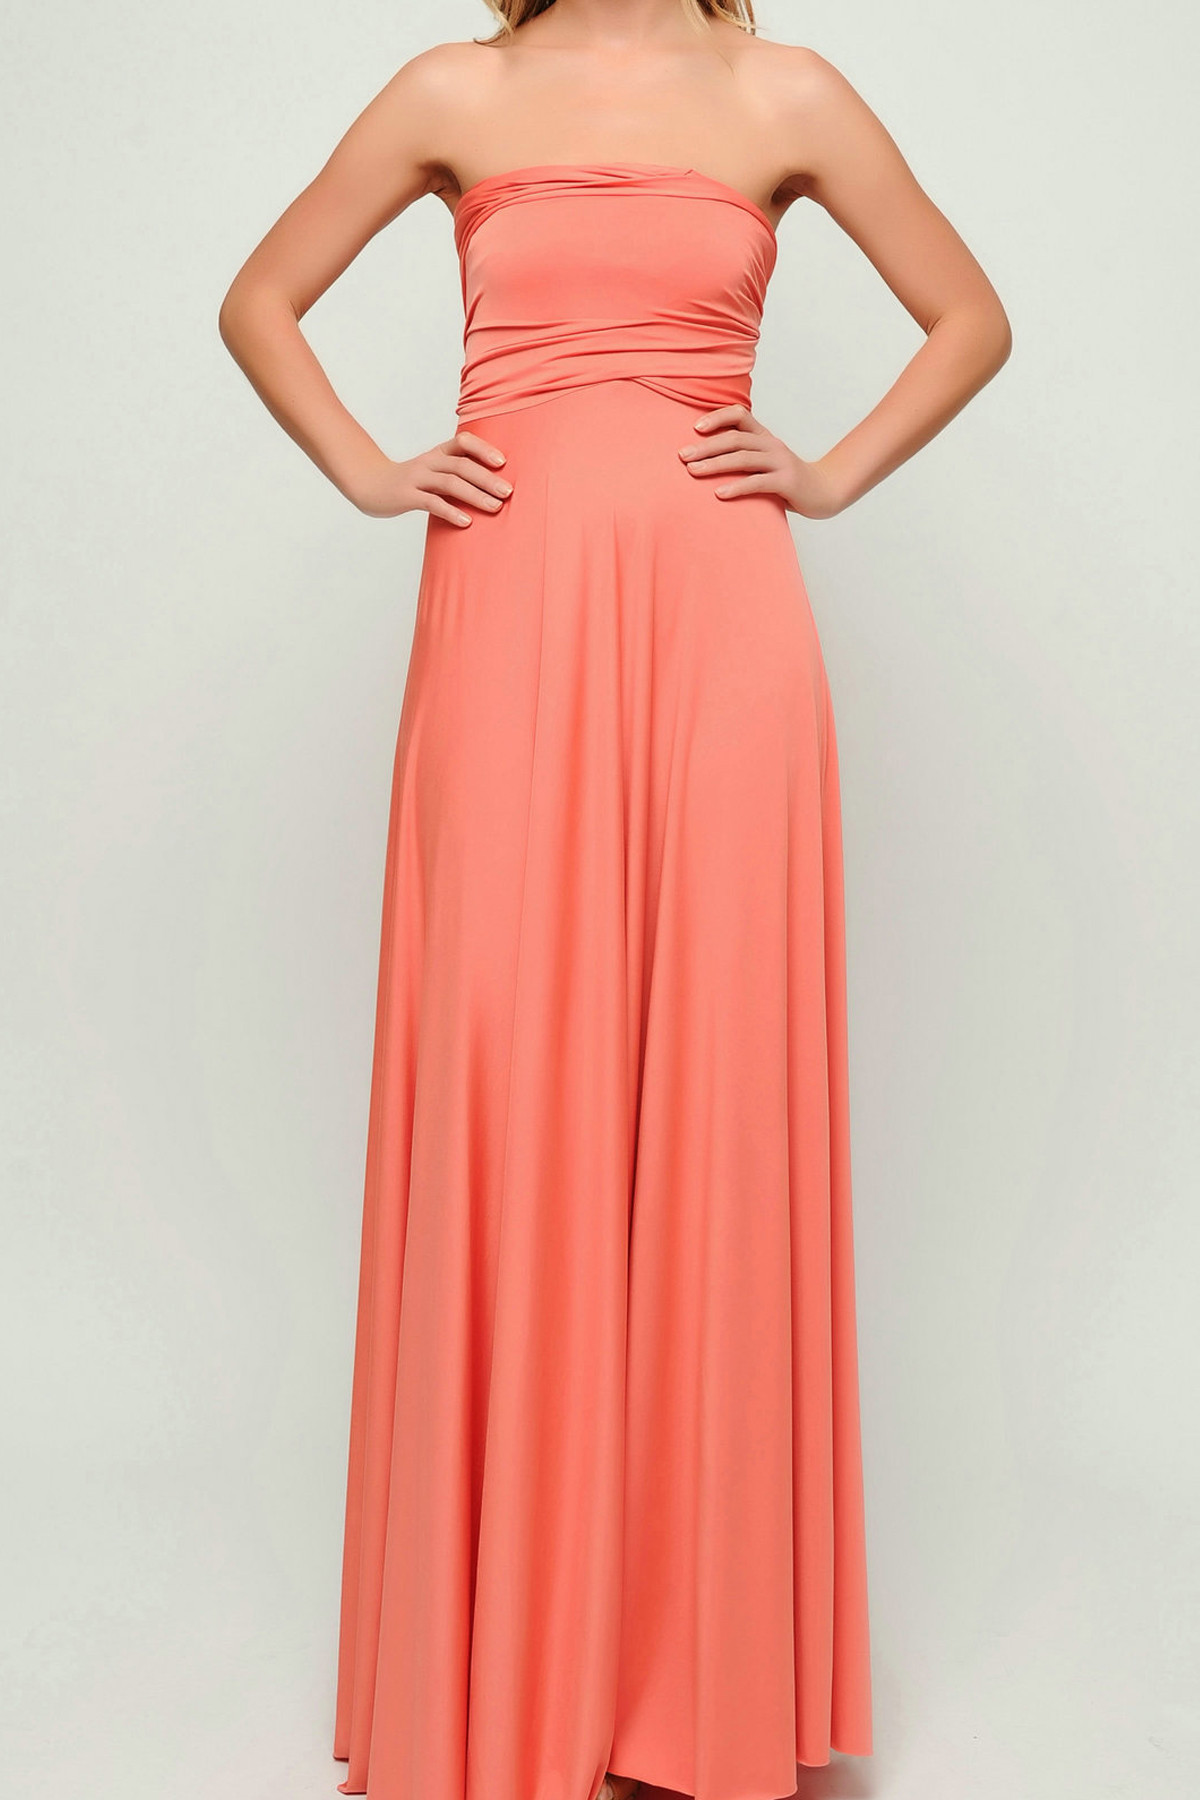 Peach Wedding Dresses
 Peach coral long infinity dresses bridesmaid dress [lgn 1